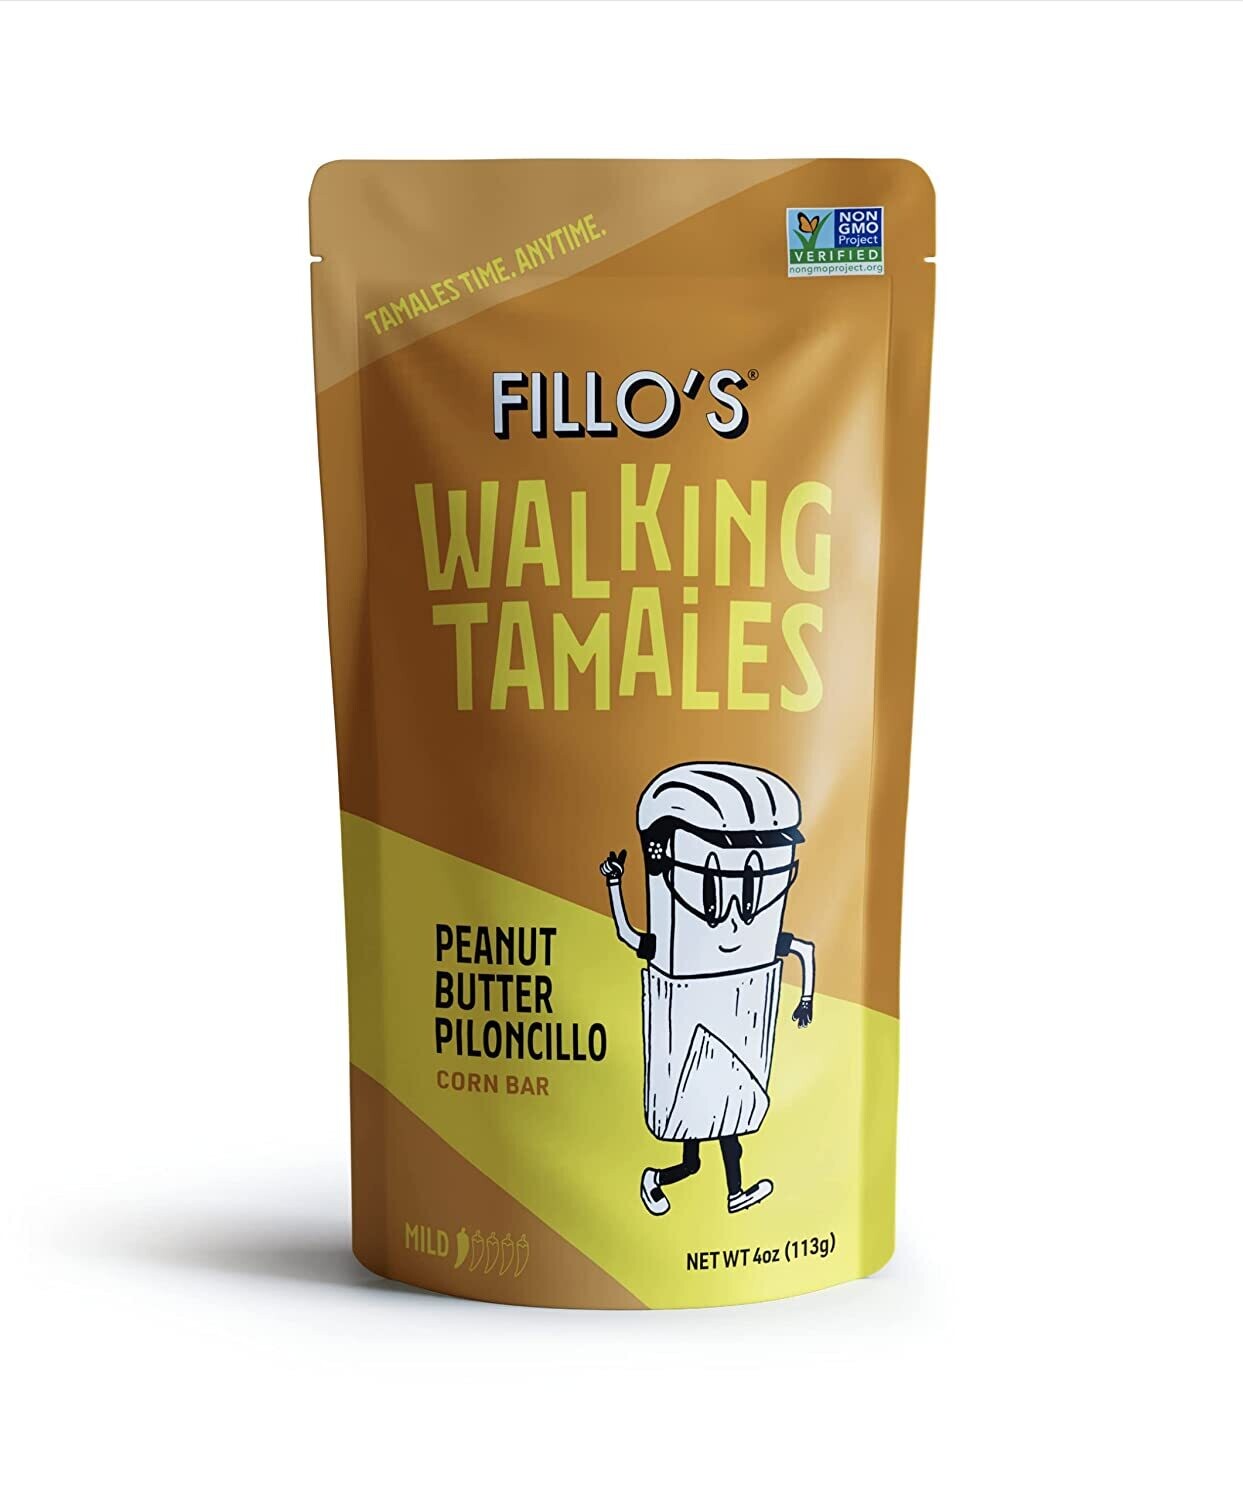 Fillo's Walking Tamales Corn Bar - Peanut Butter Piloncillo (mild)